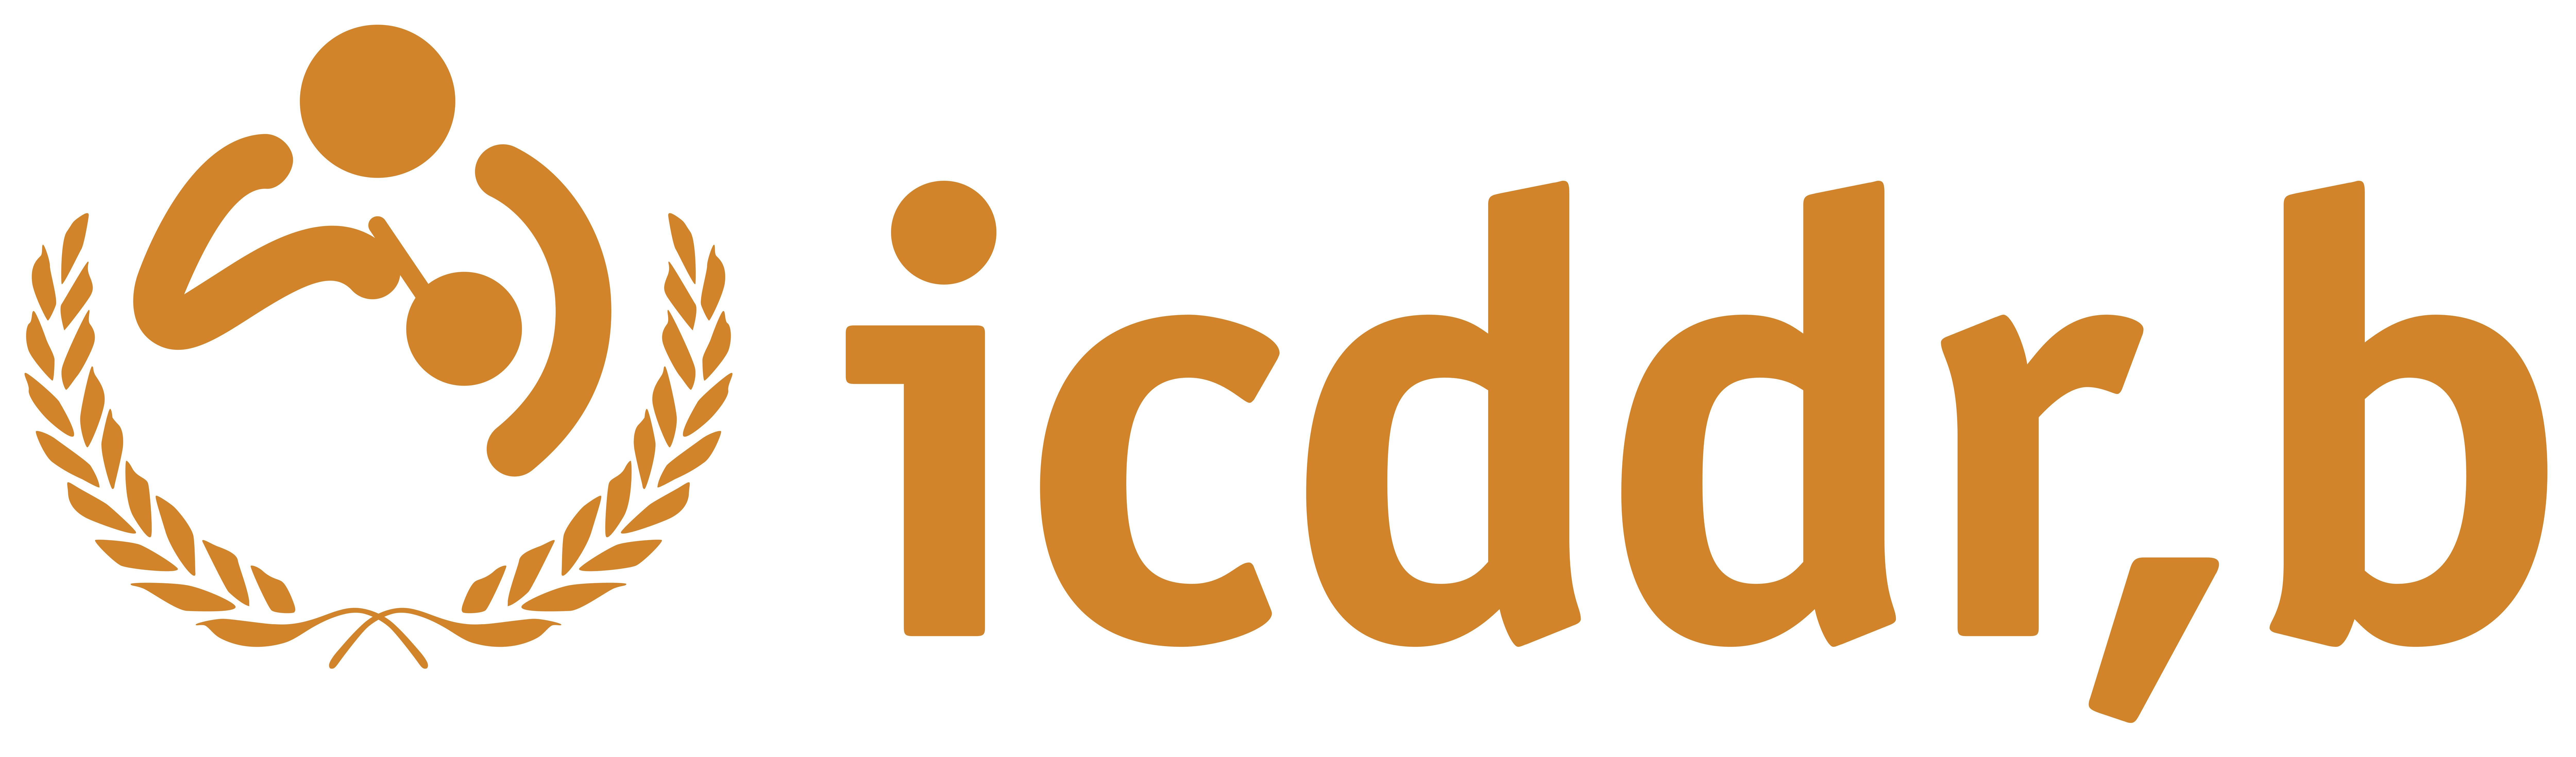 icddrb-logo_Ochre-colour_High-res.jpg